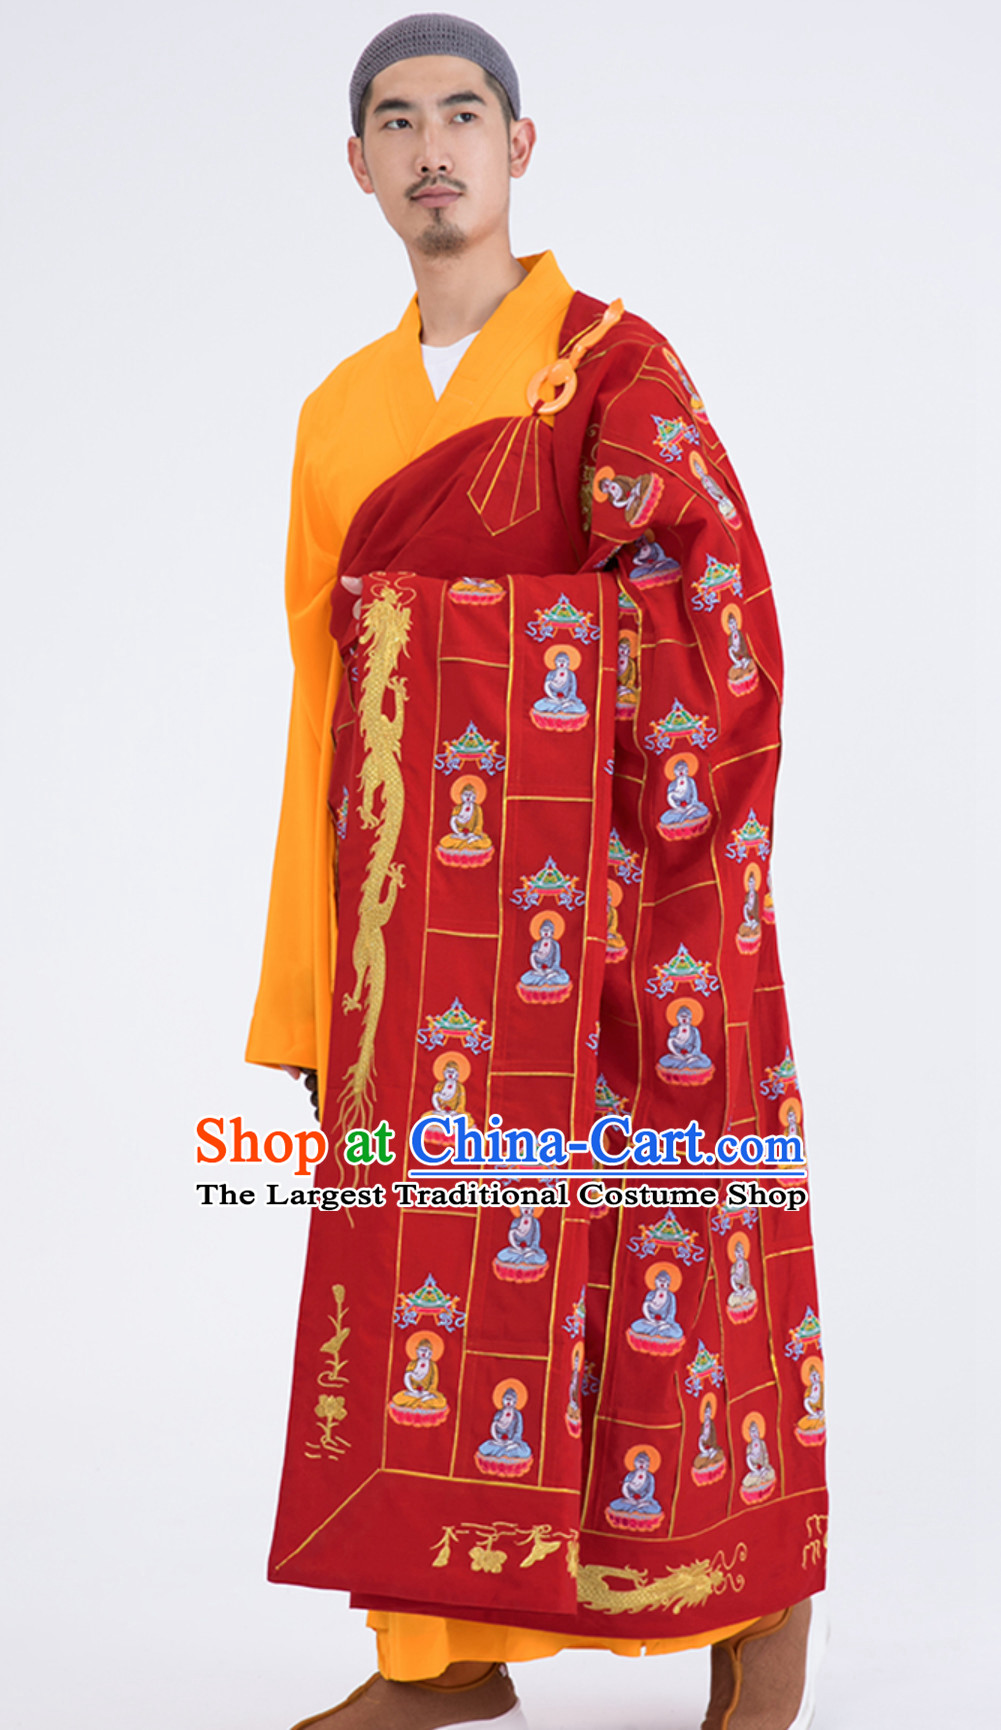 Chinese Traditional Kesa Kasaya Buddhist Monk Clothing Complete Set